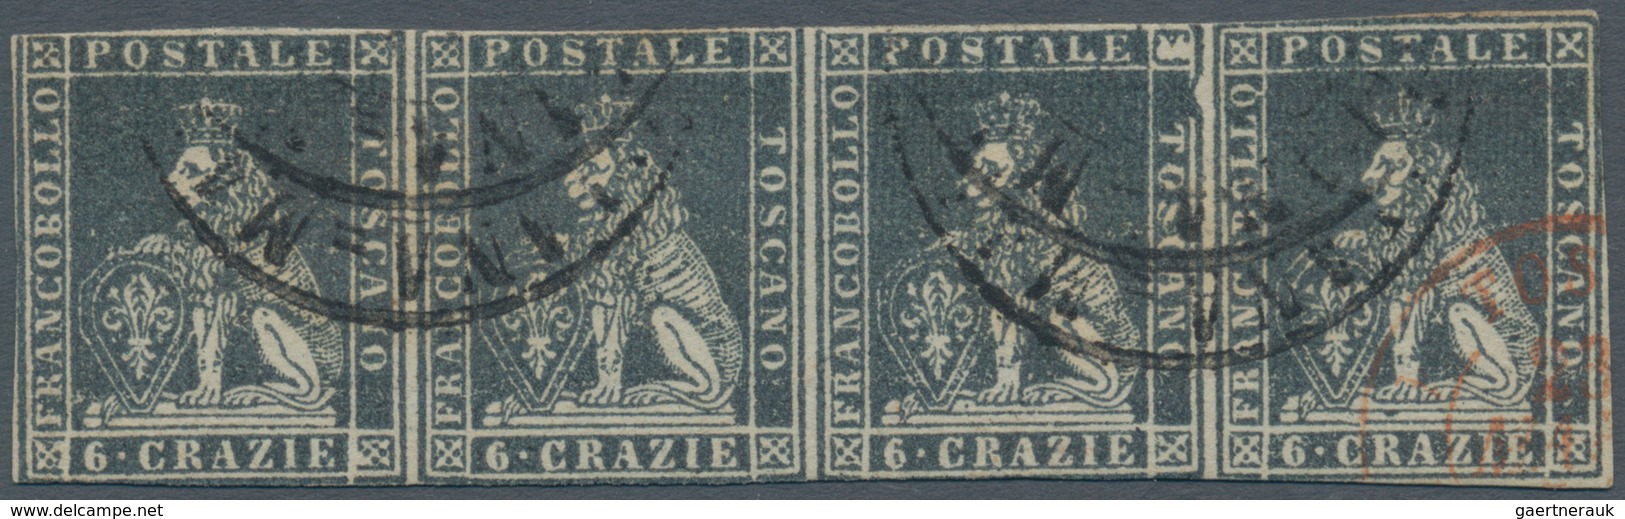 00893 Italien - Altitalienische Staaten: Toscana: 1851, 6 Crarie Dark Grey On Grey Paper, Horizontal Strip - Tuscany